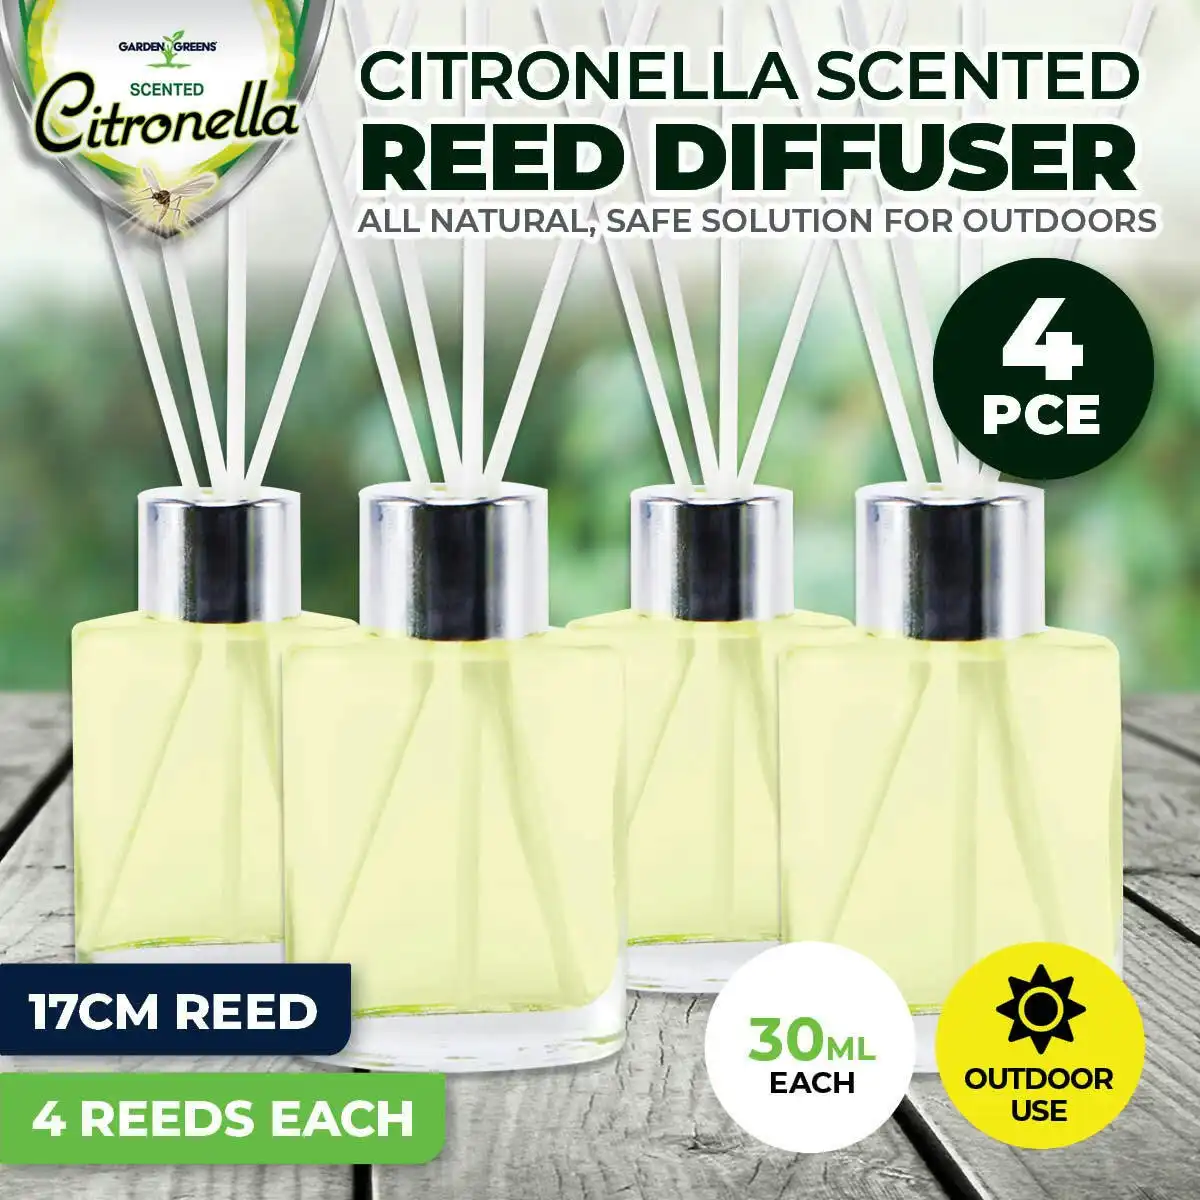 Garden Greens 4PCE Citronella Scented Reed Diffusers Natural Repellent 30ml